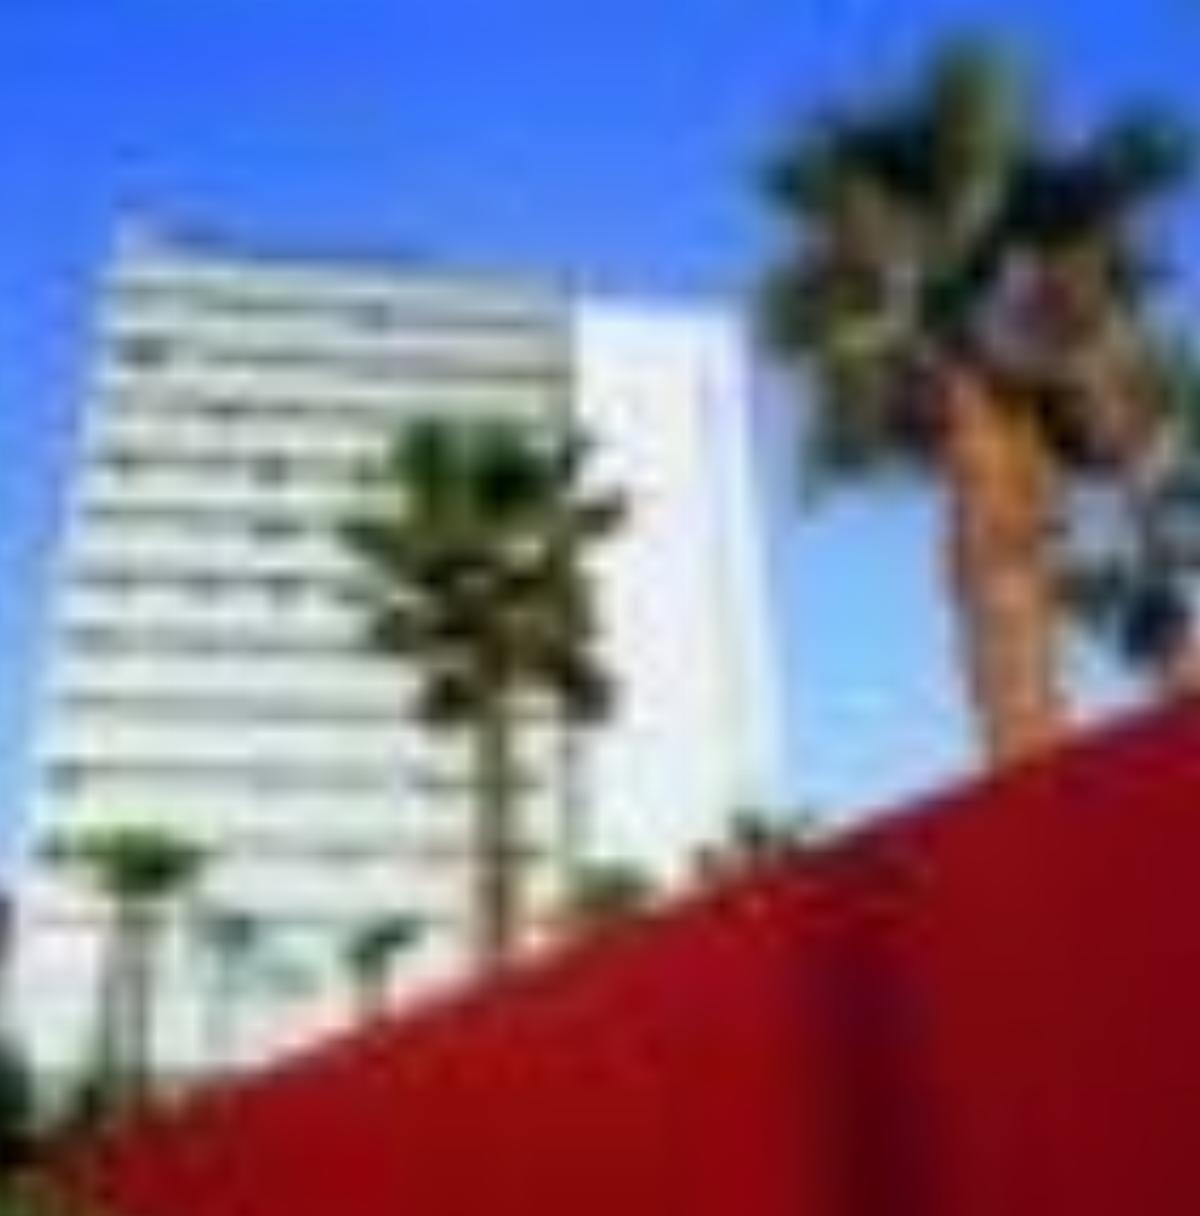 Occidental Atenea Mar - Adults Only Hotel Barcelona Spain